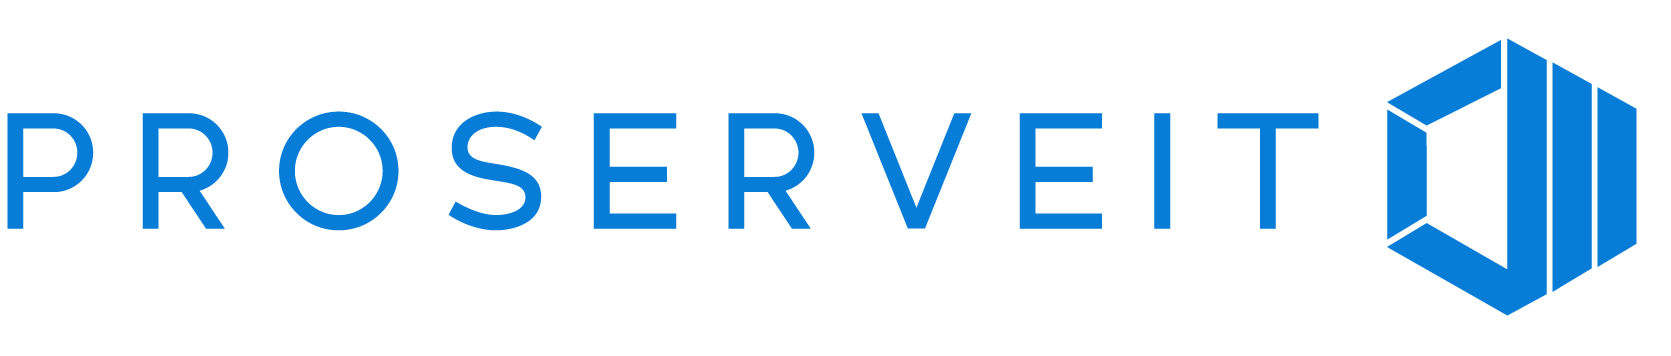 ProServeIT logo